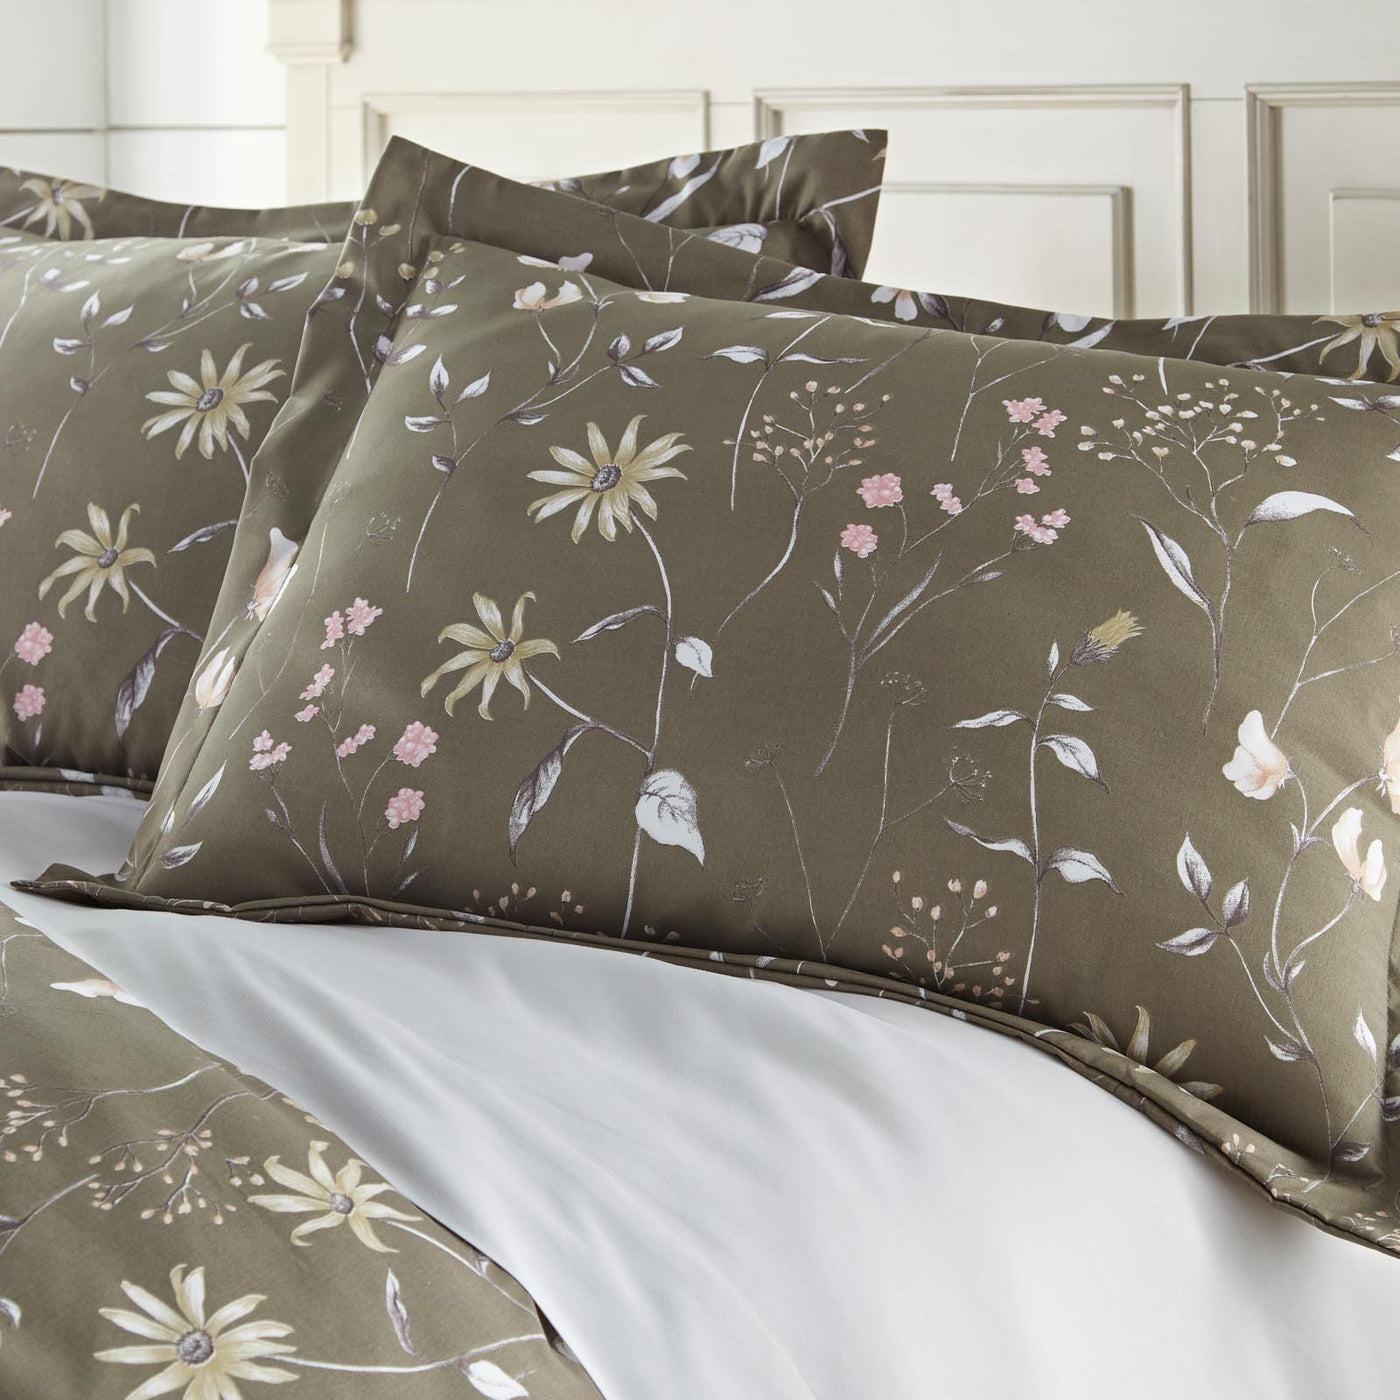 Floral Daydream in olive brown floral print duvet cover set